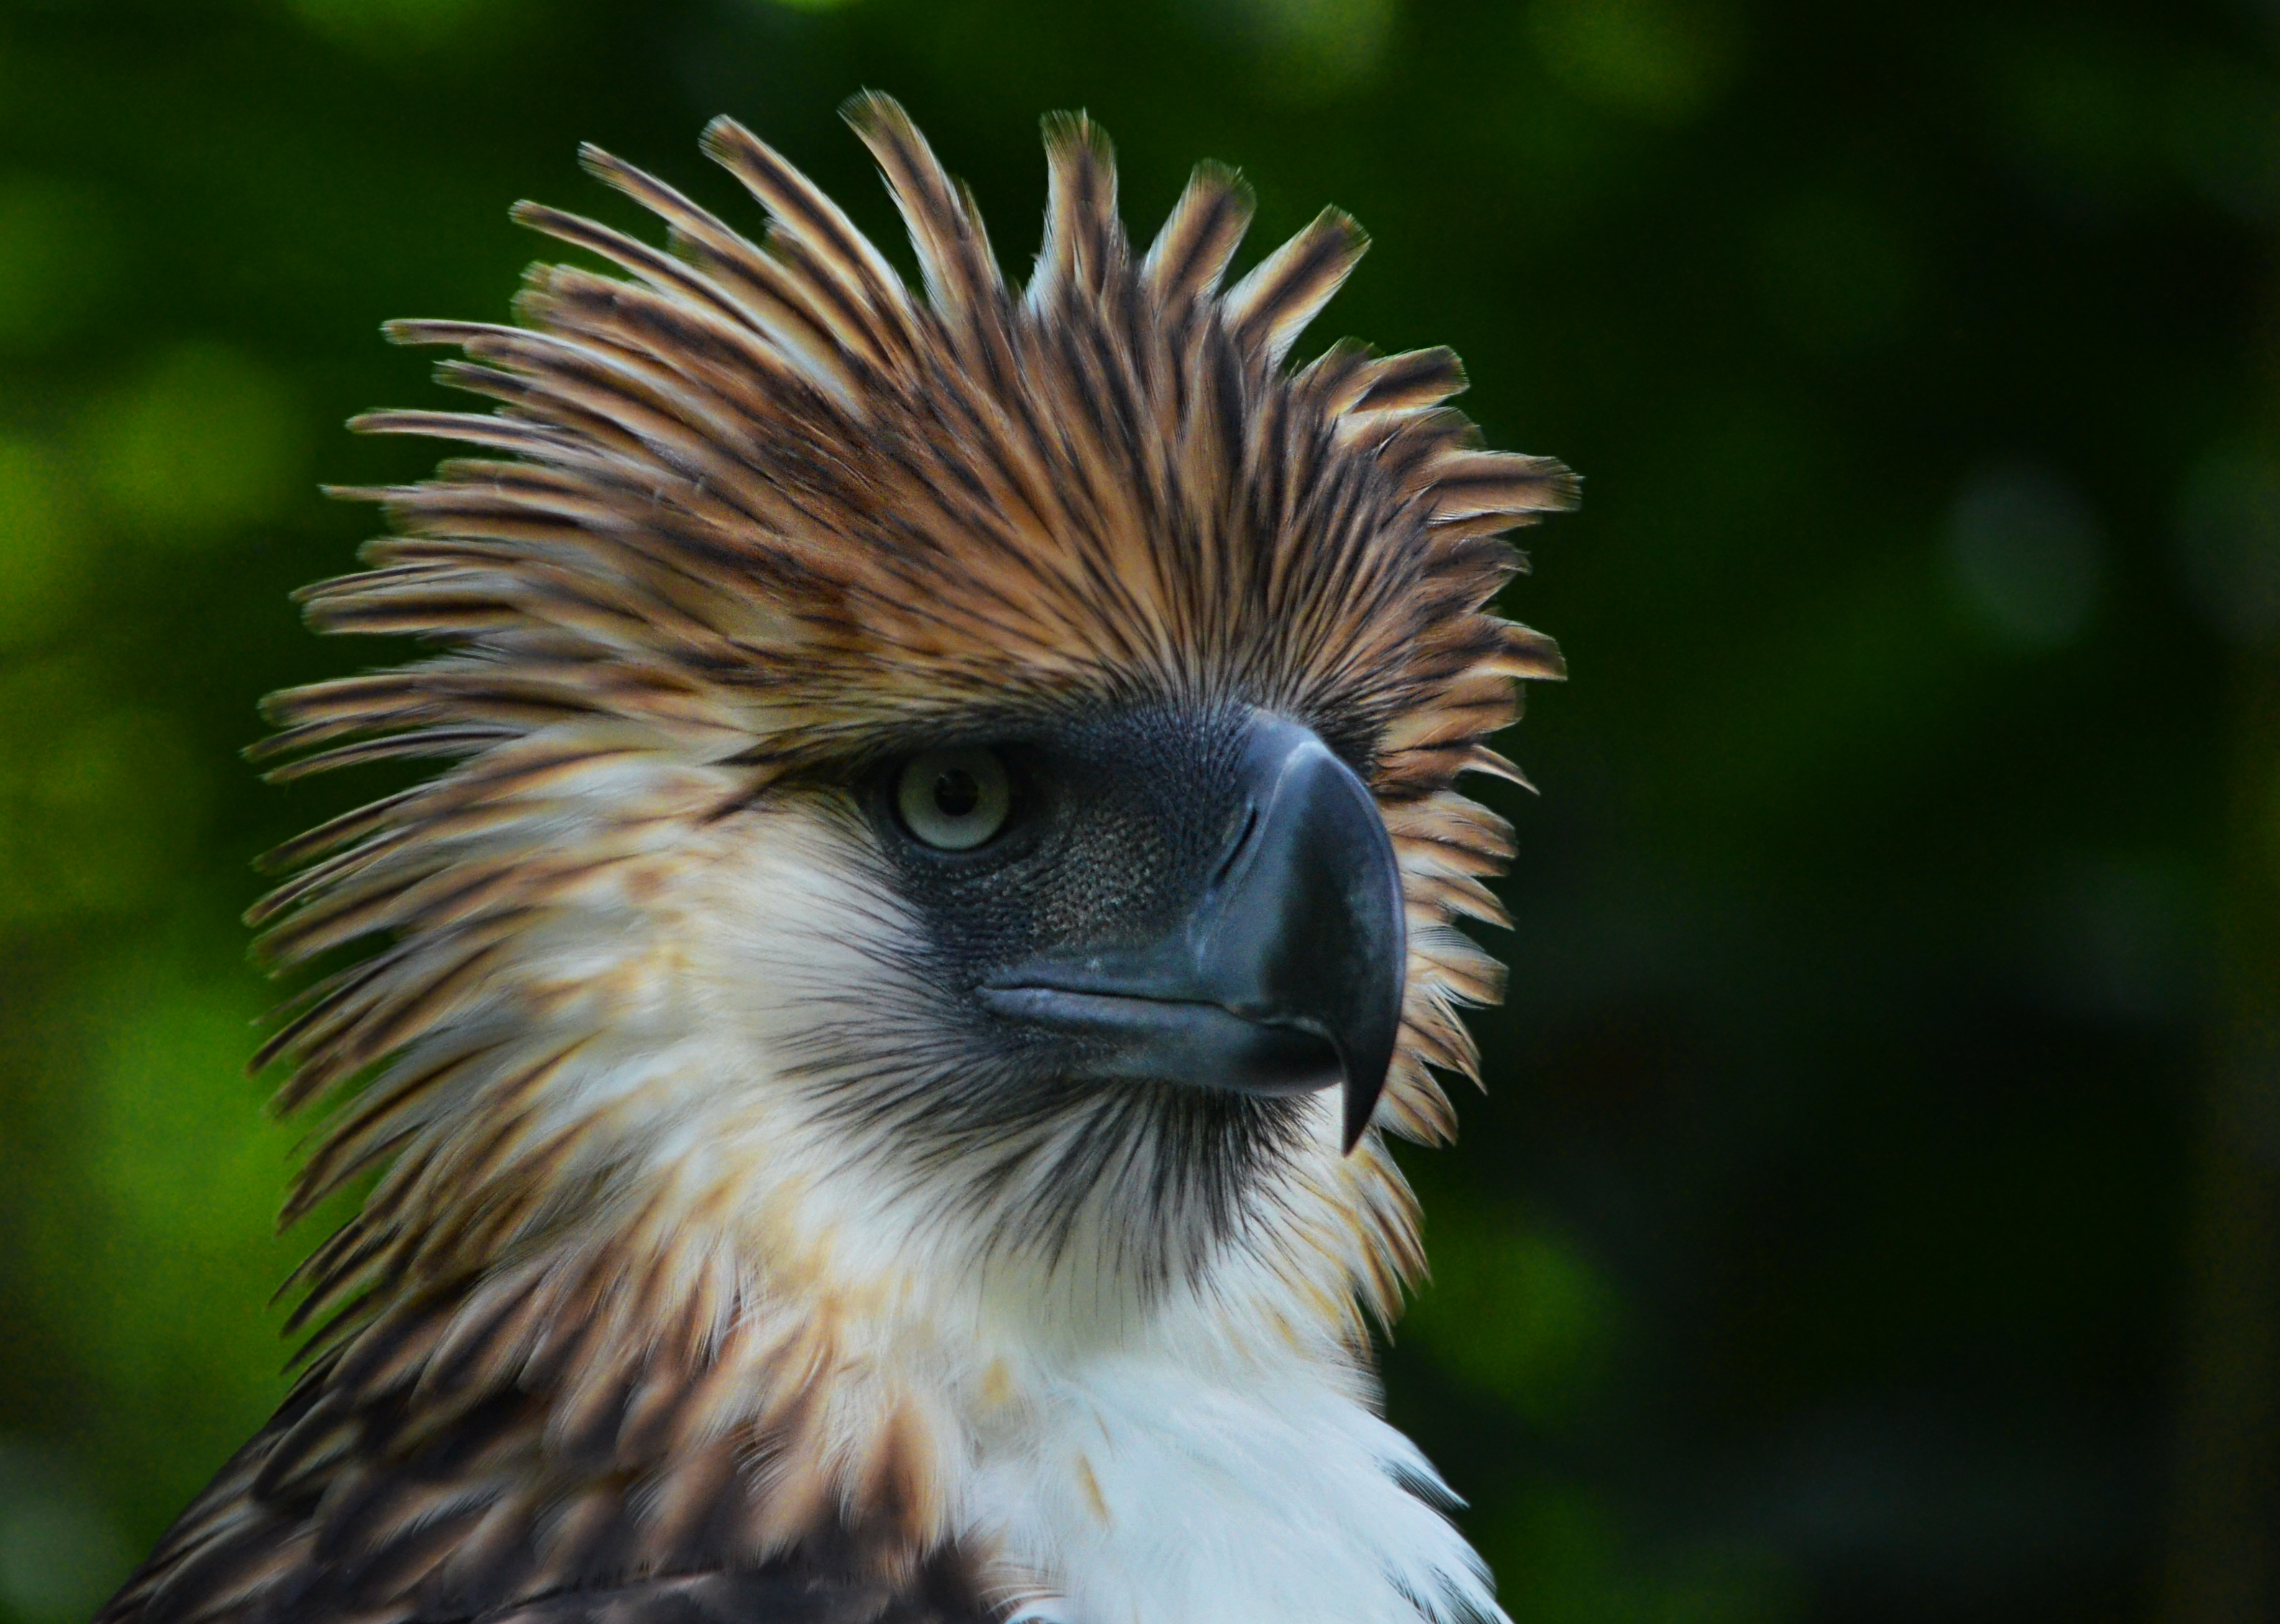  Philippines Eagle 